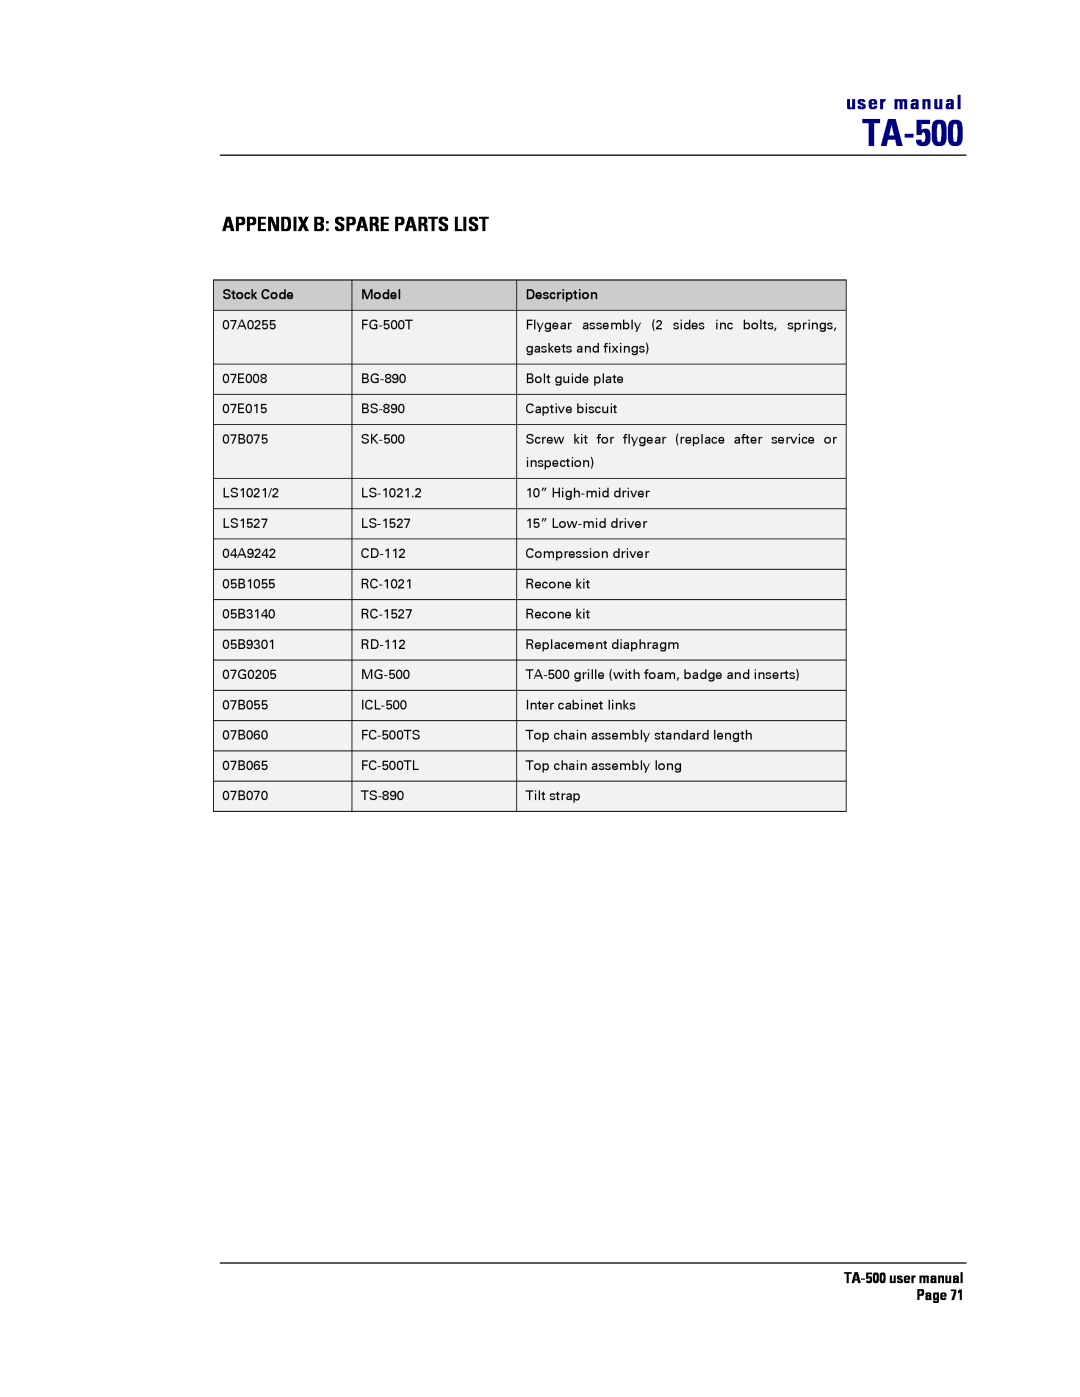 Turbosound TA-500TDP, TA-500HDP, TA-500DP, TA-500HM user manual Appendix B Spare Parts List, Stock Code, Model, Description 